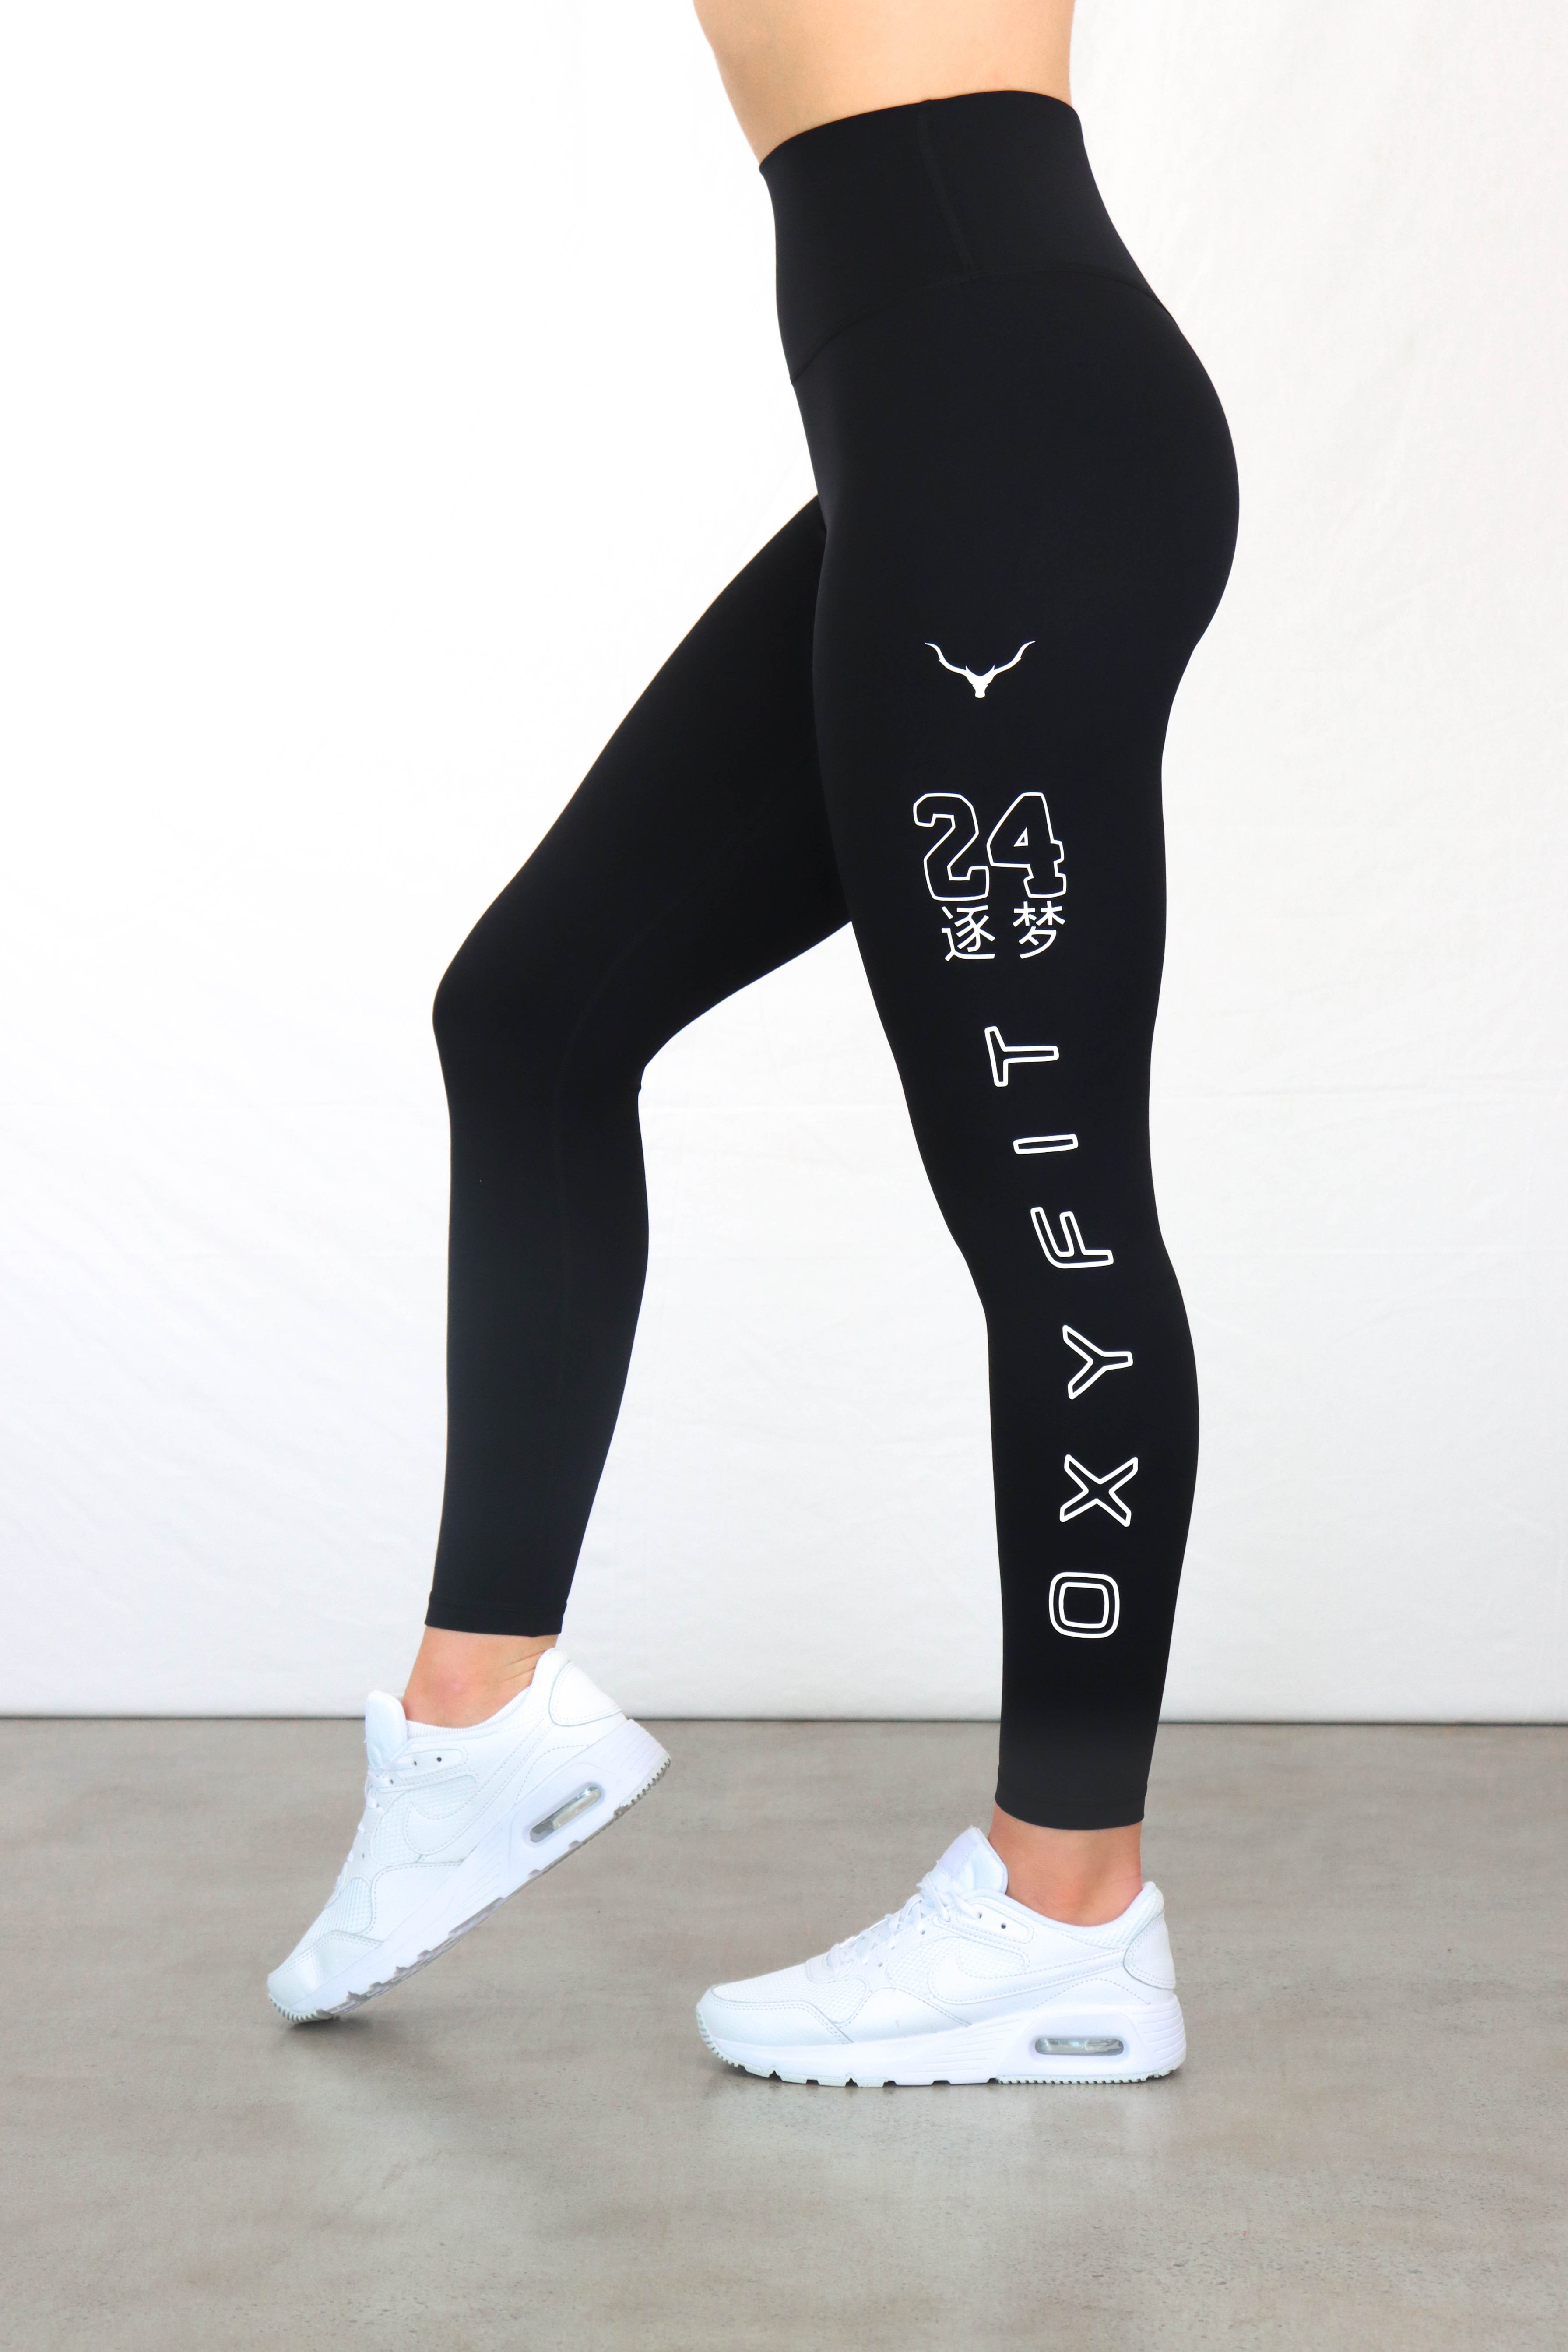 OXYFIT Leggings Jump 64127 Black- Sexy Workout Leggings